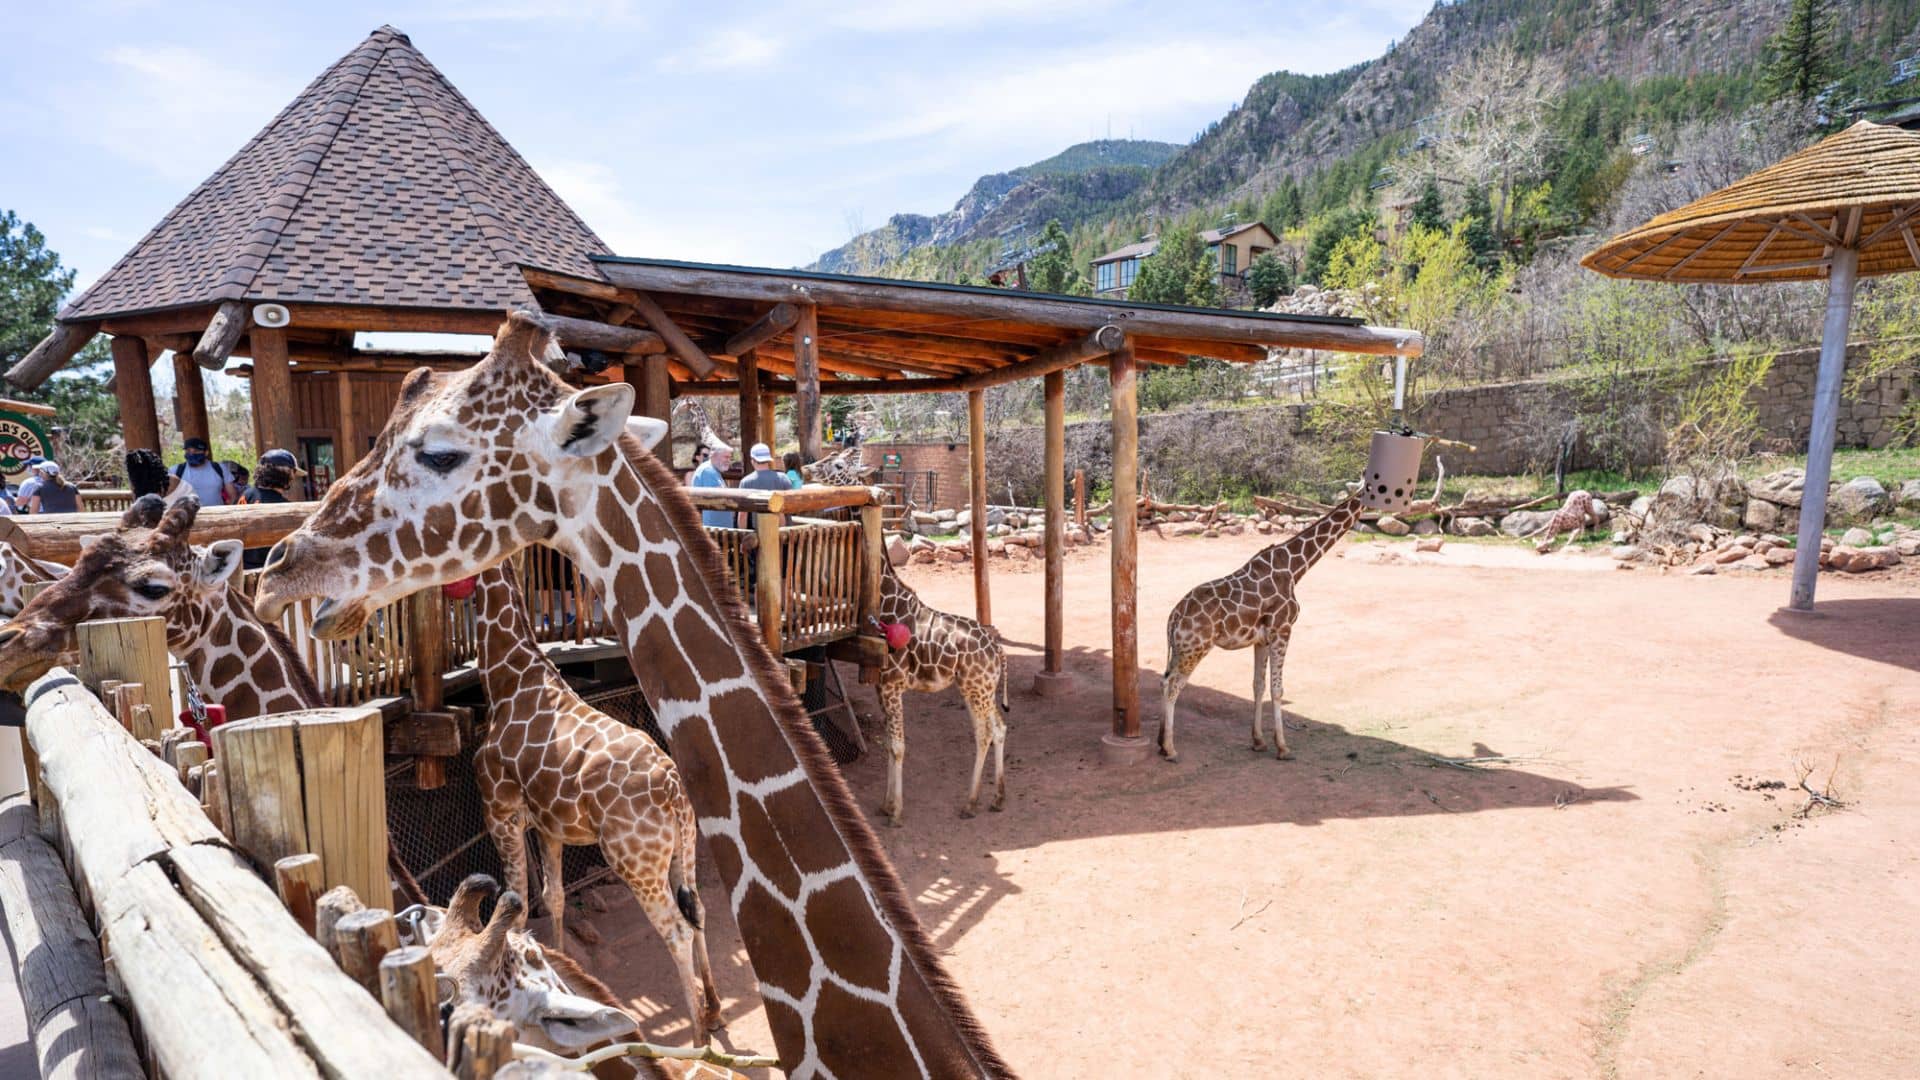 Cheyenne Mountian Zoo giraffe pictures